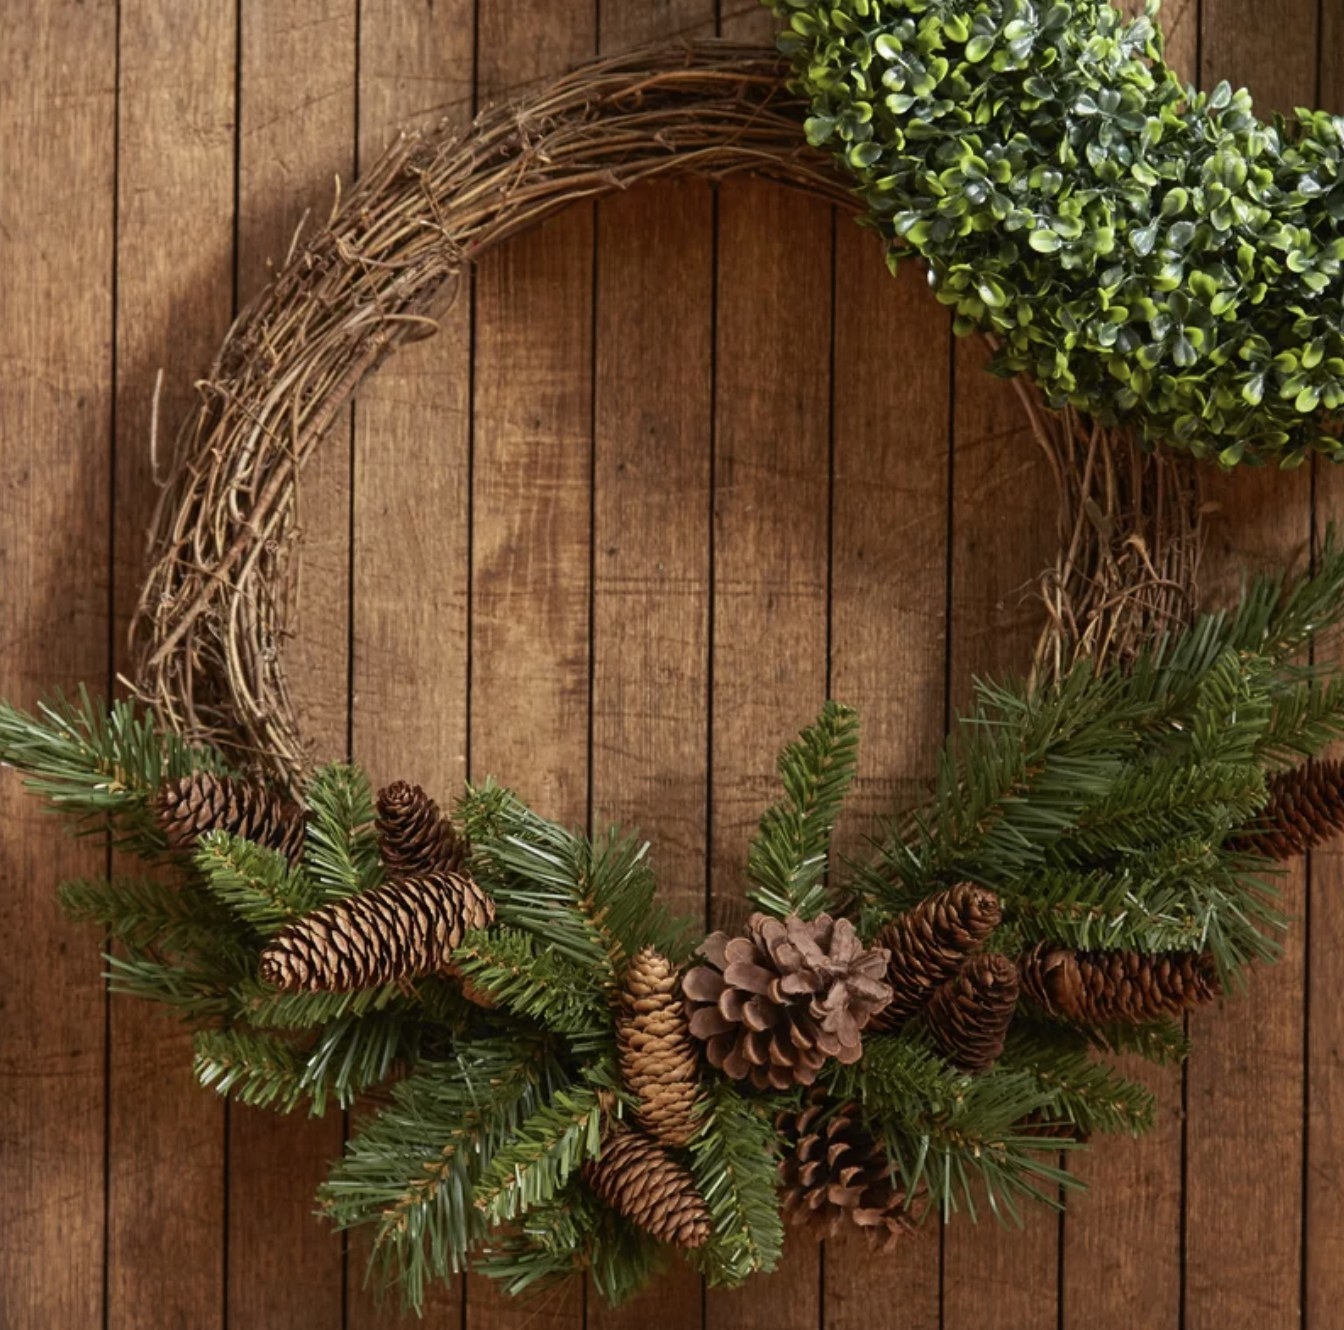 Simple wreath